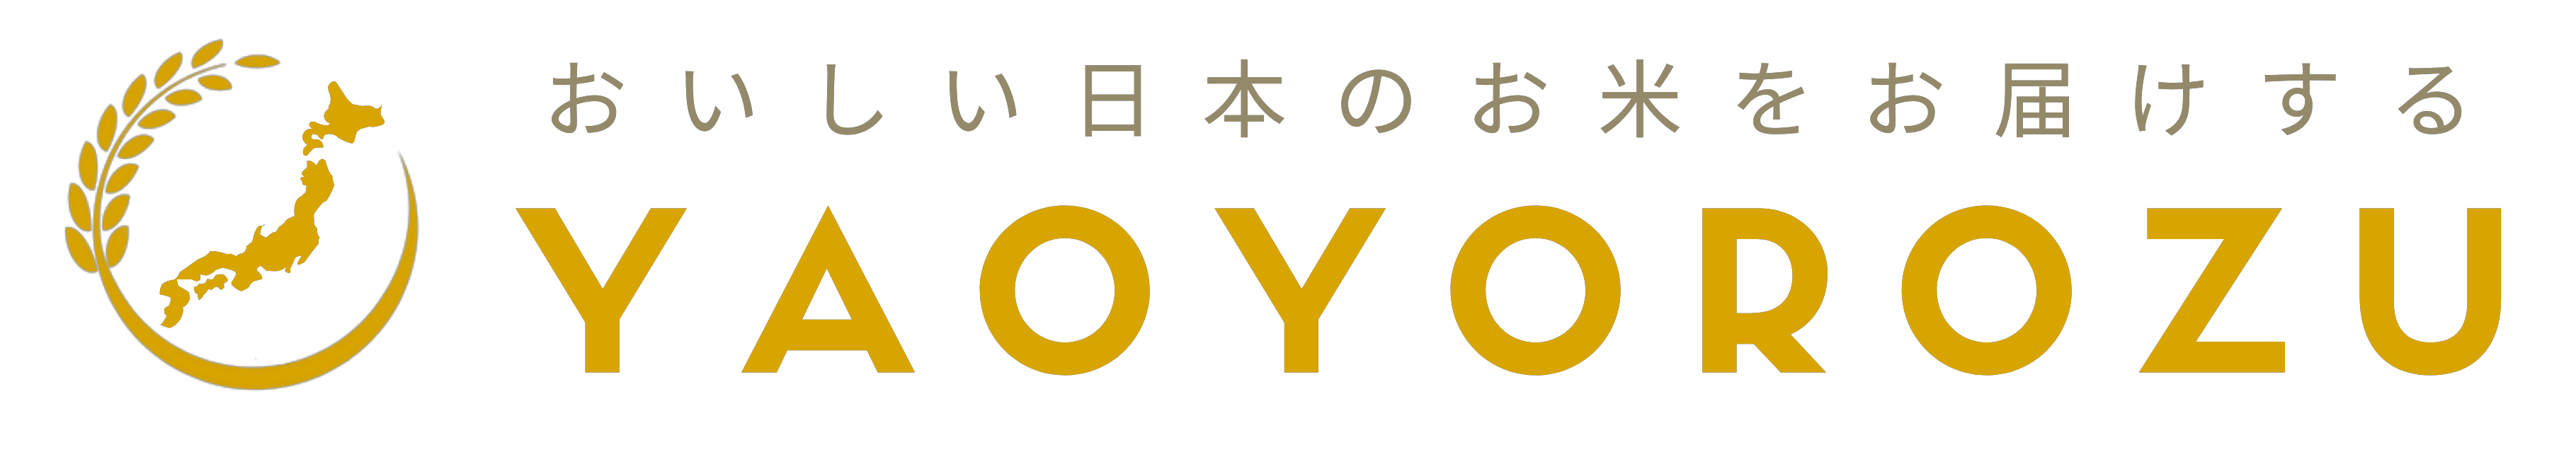 YAOYOROZU｜おいしいお米の通販サイト